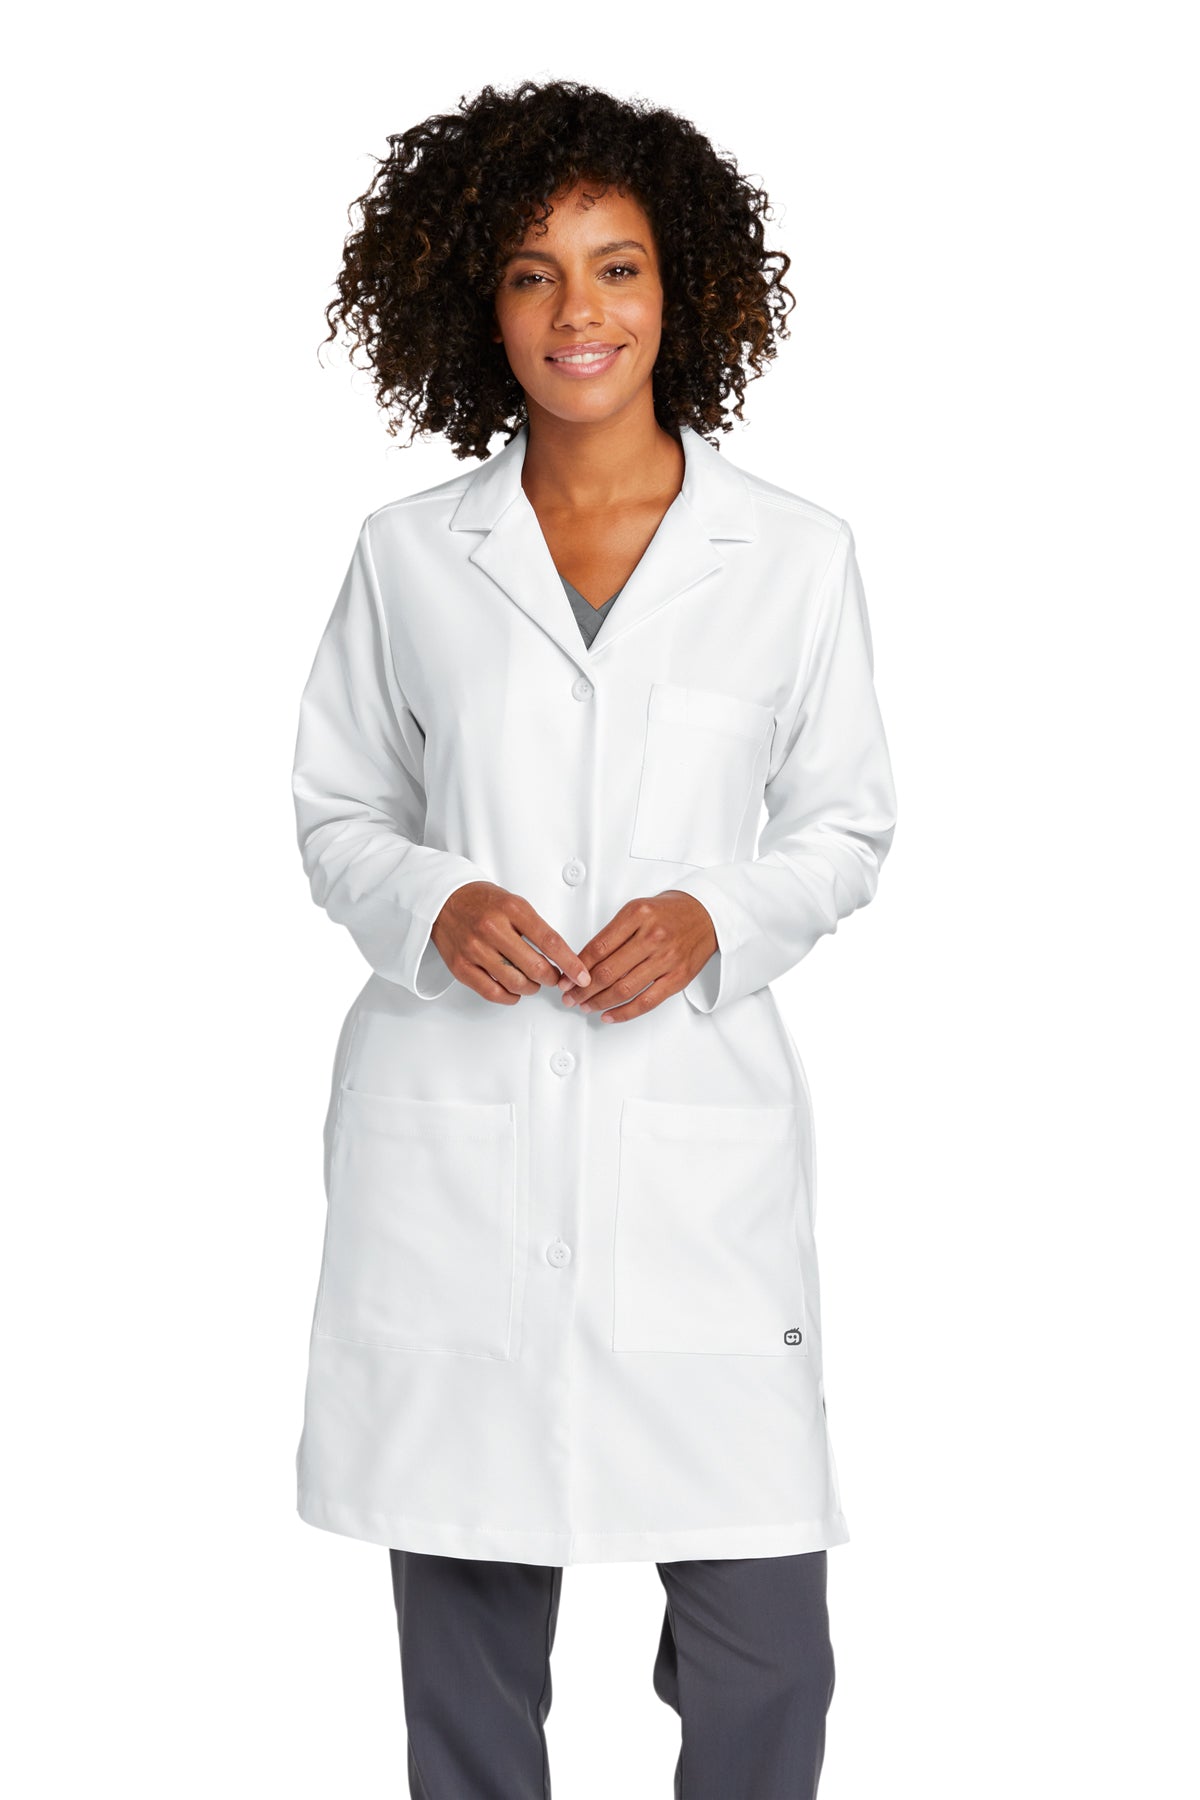 Wonder Wink Women's Lab Coat